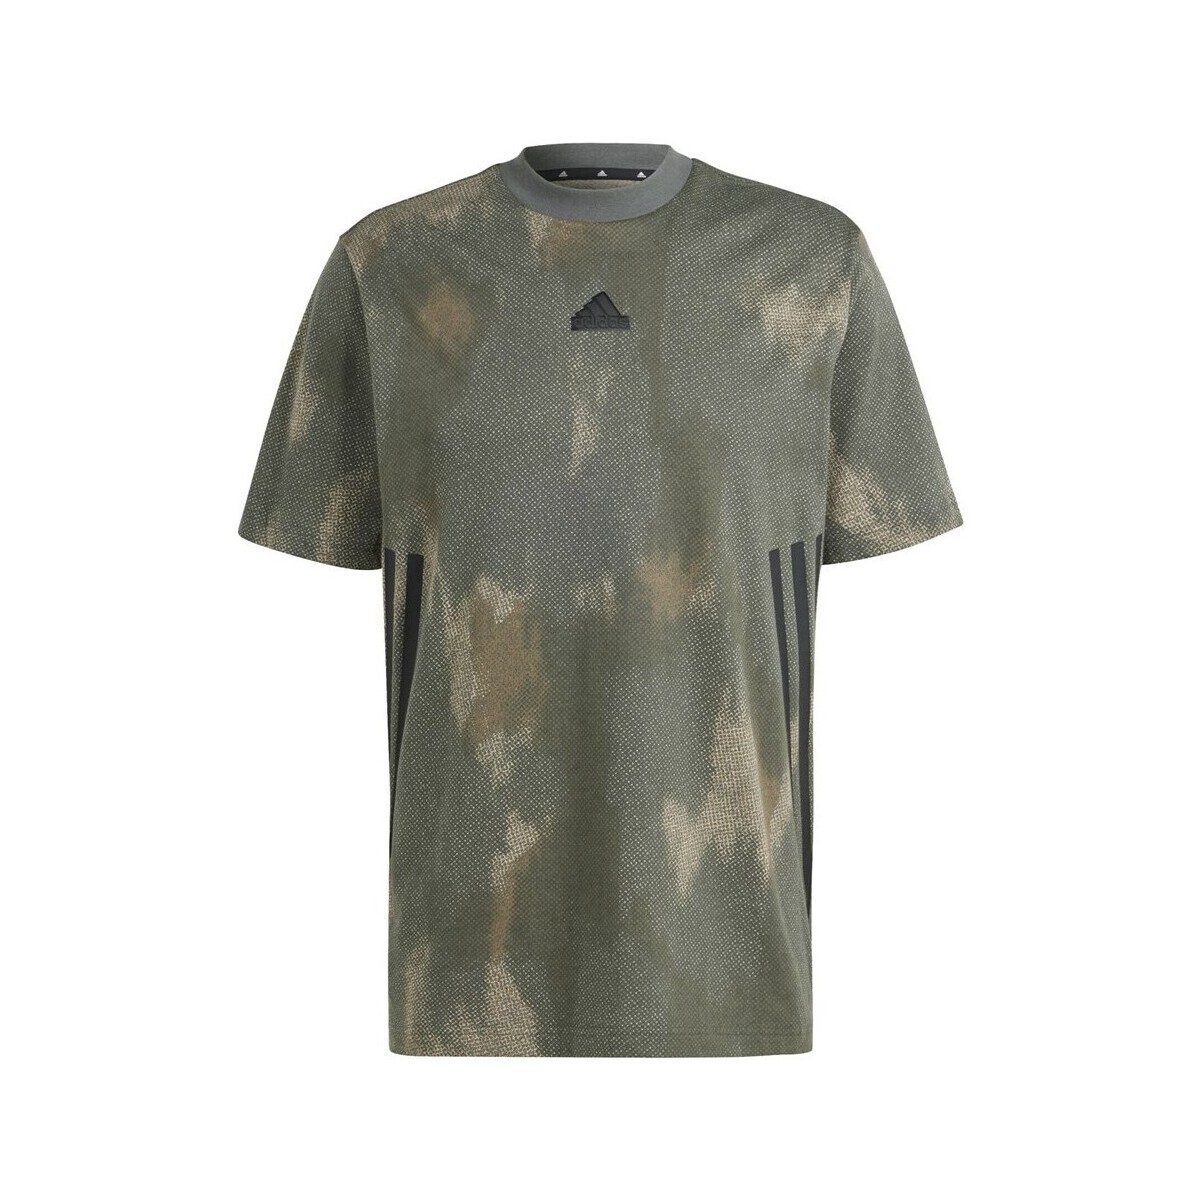 Clothing Men Short-sleeved t-shirts adidas Originals IR9213 Grey